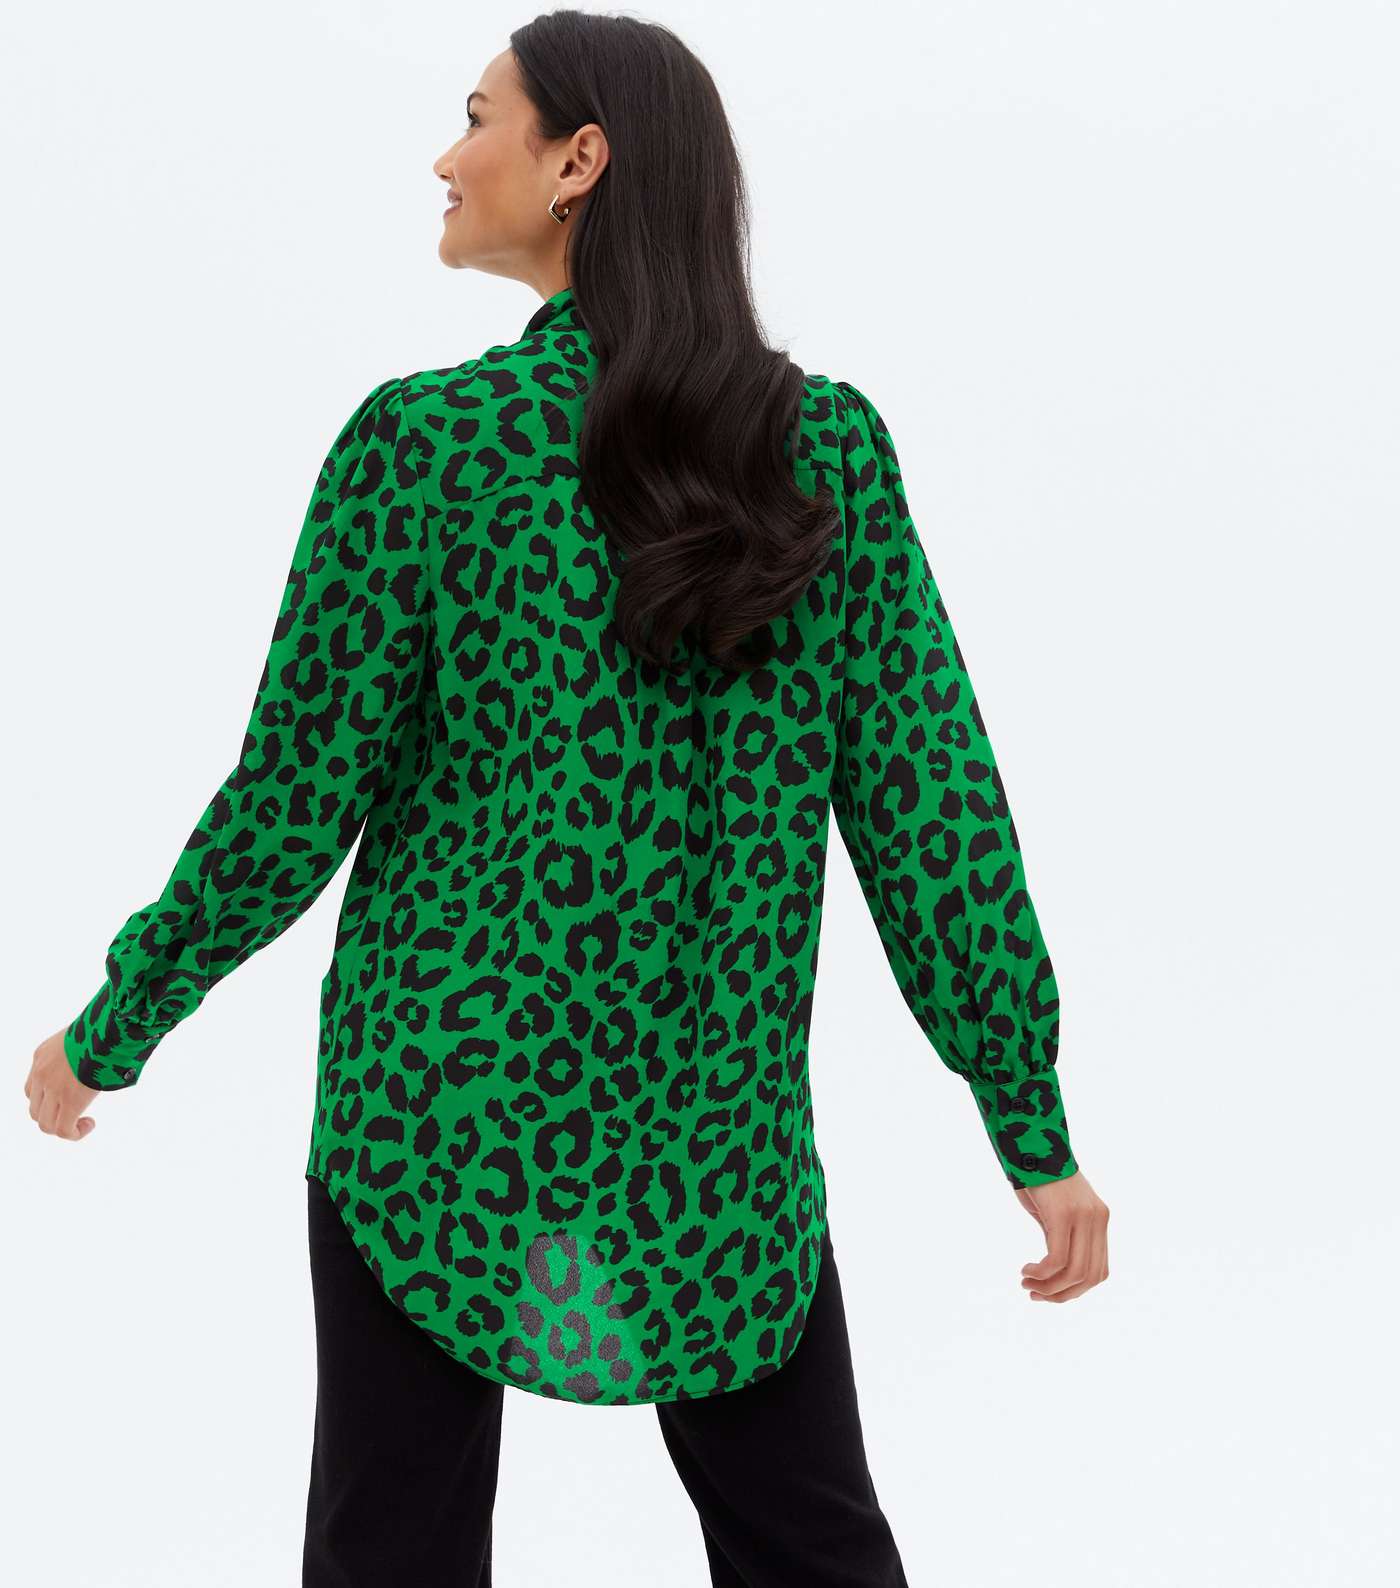 Green Leopard Print Long Shirt Image 4